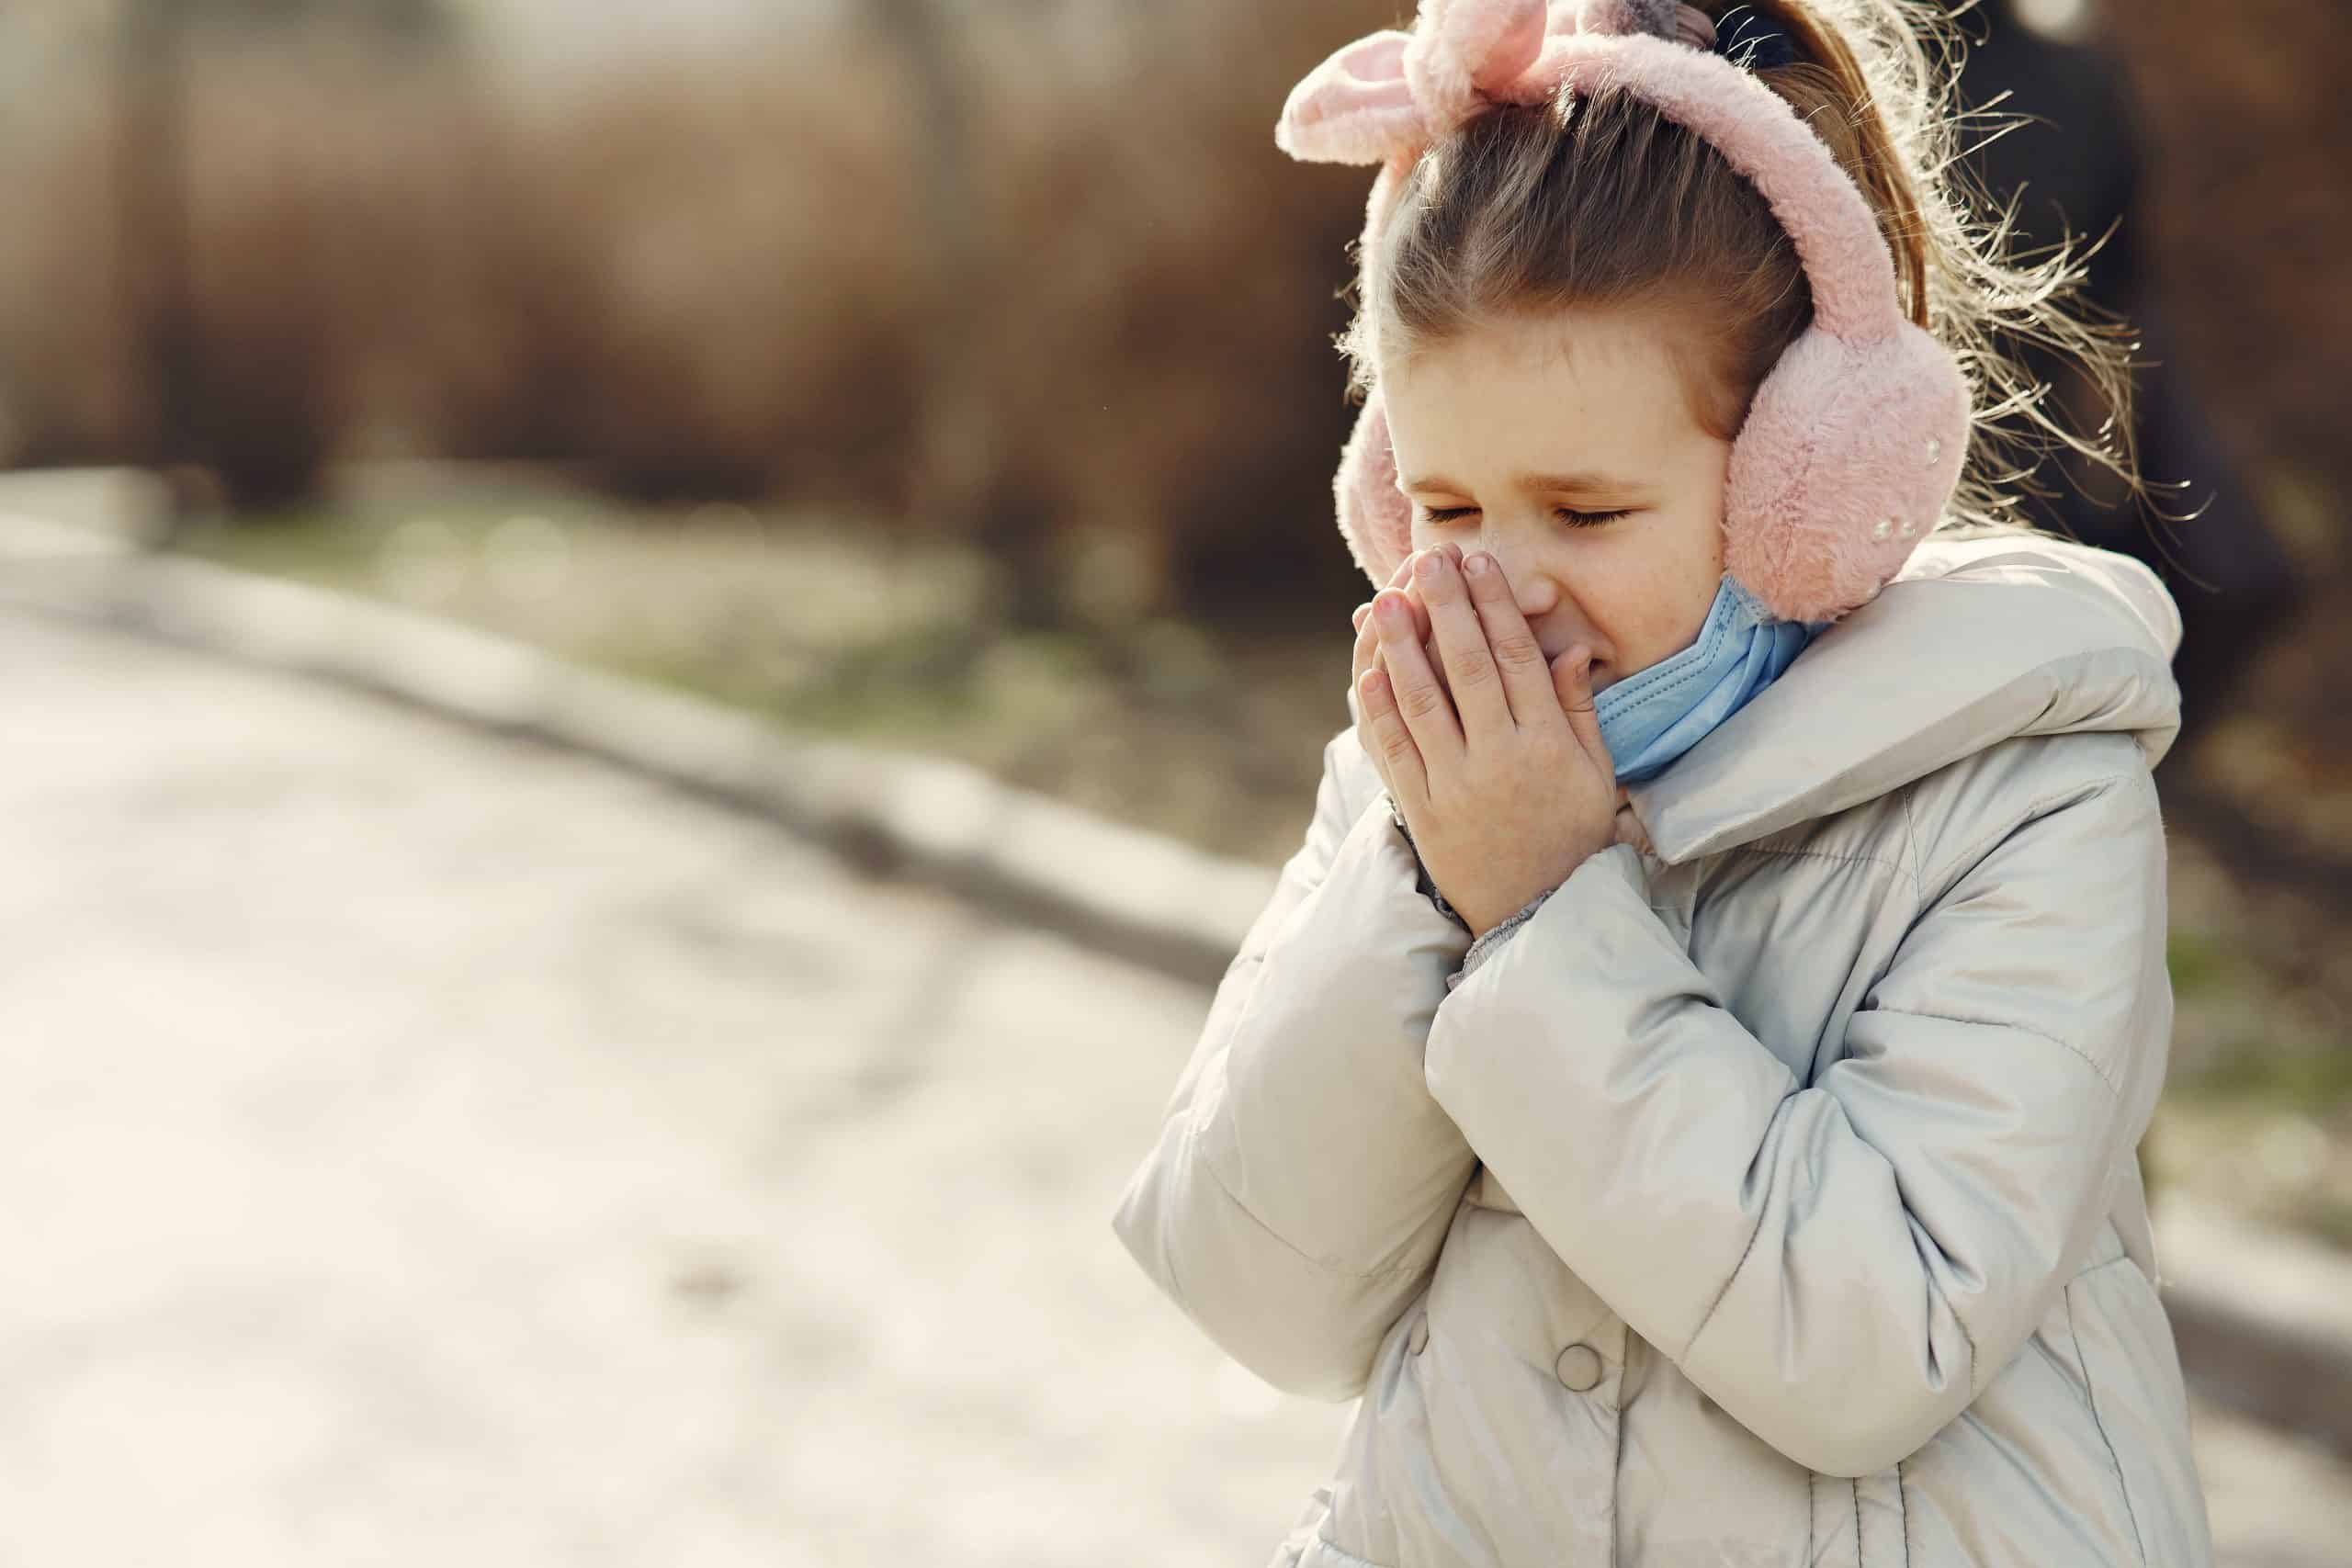 hsc module 7 biology - sneezing can spread disease